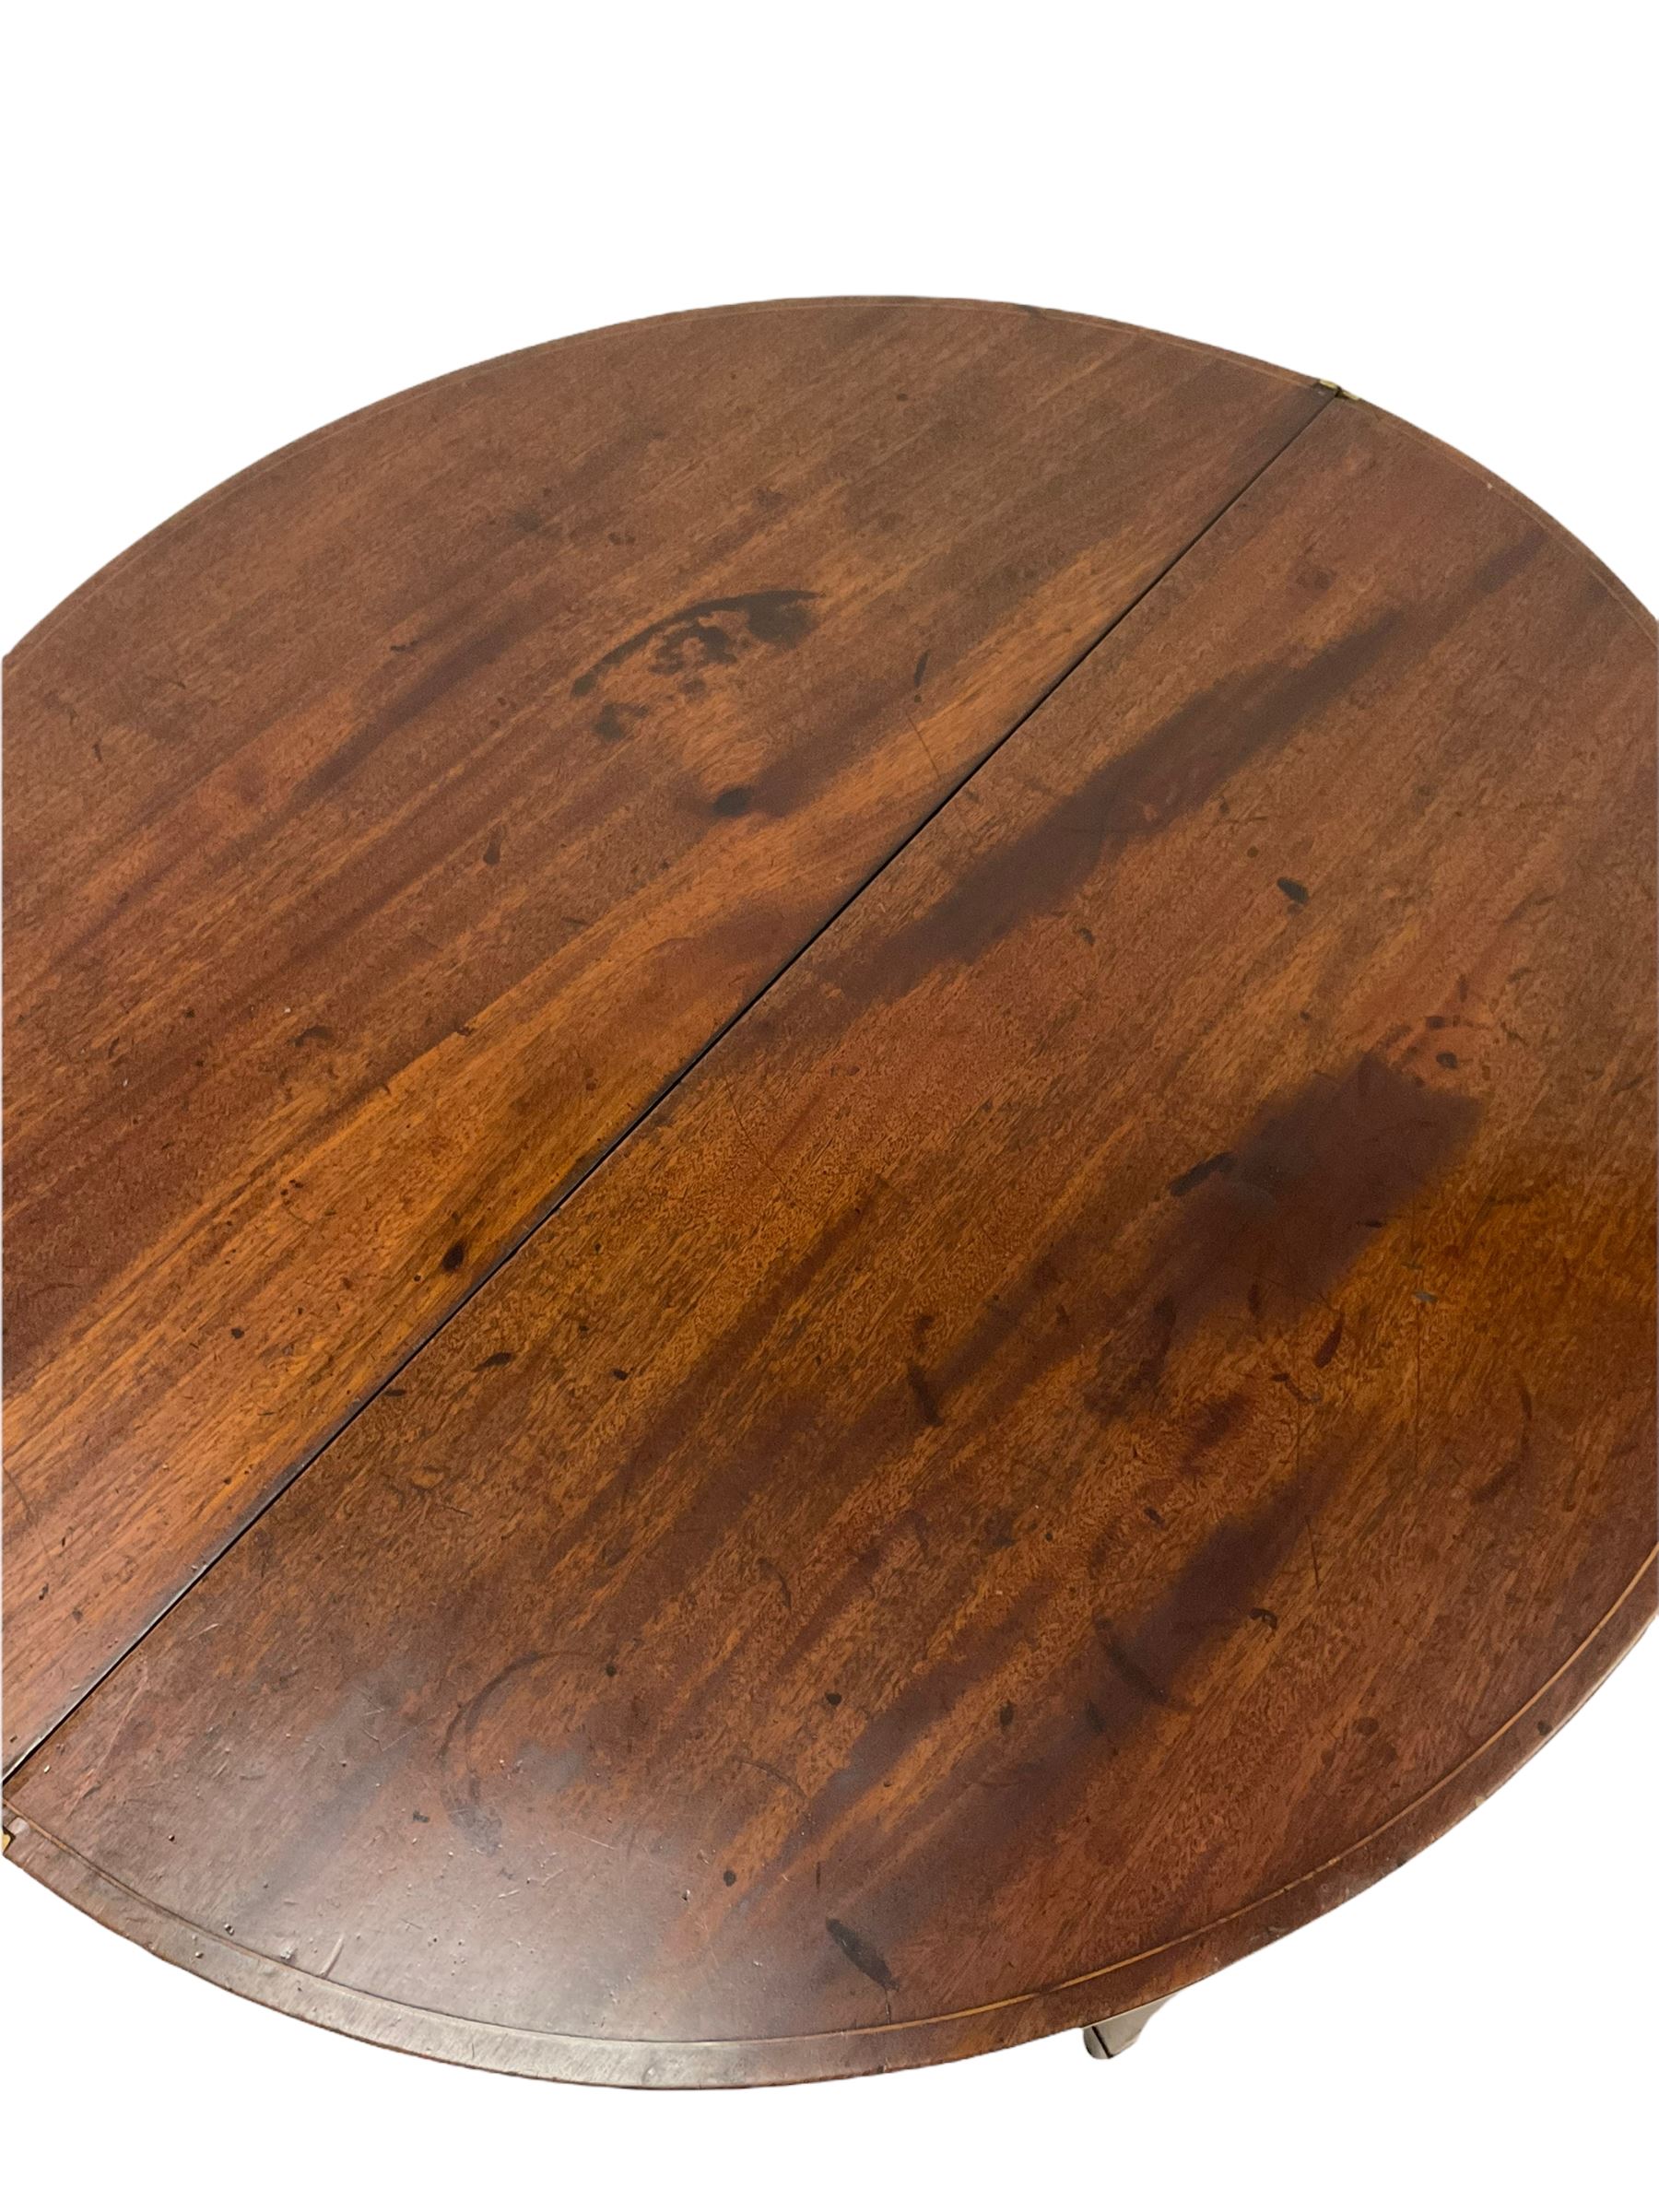 George III mahogany demi-lune tea table - Image 5 of 5